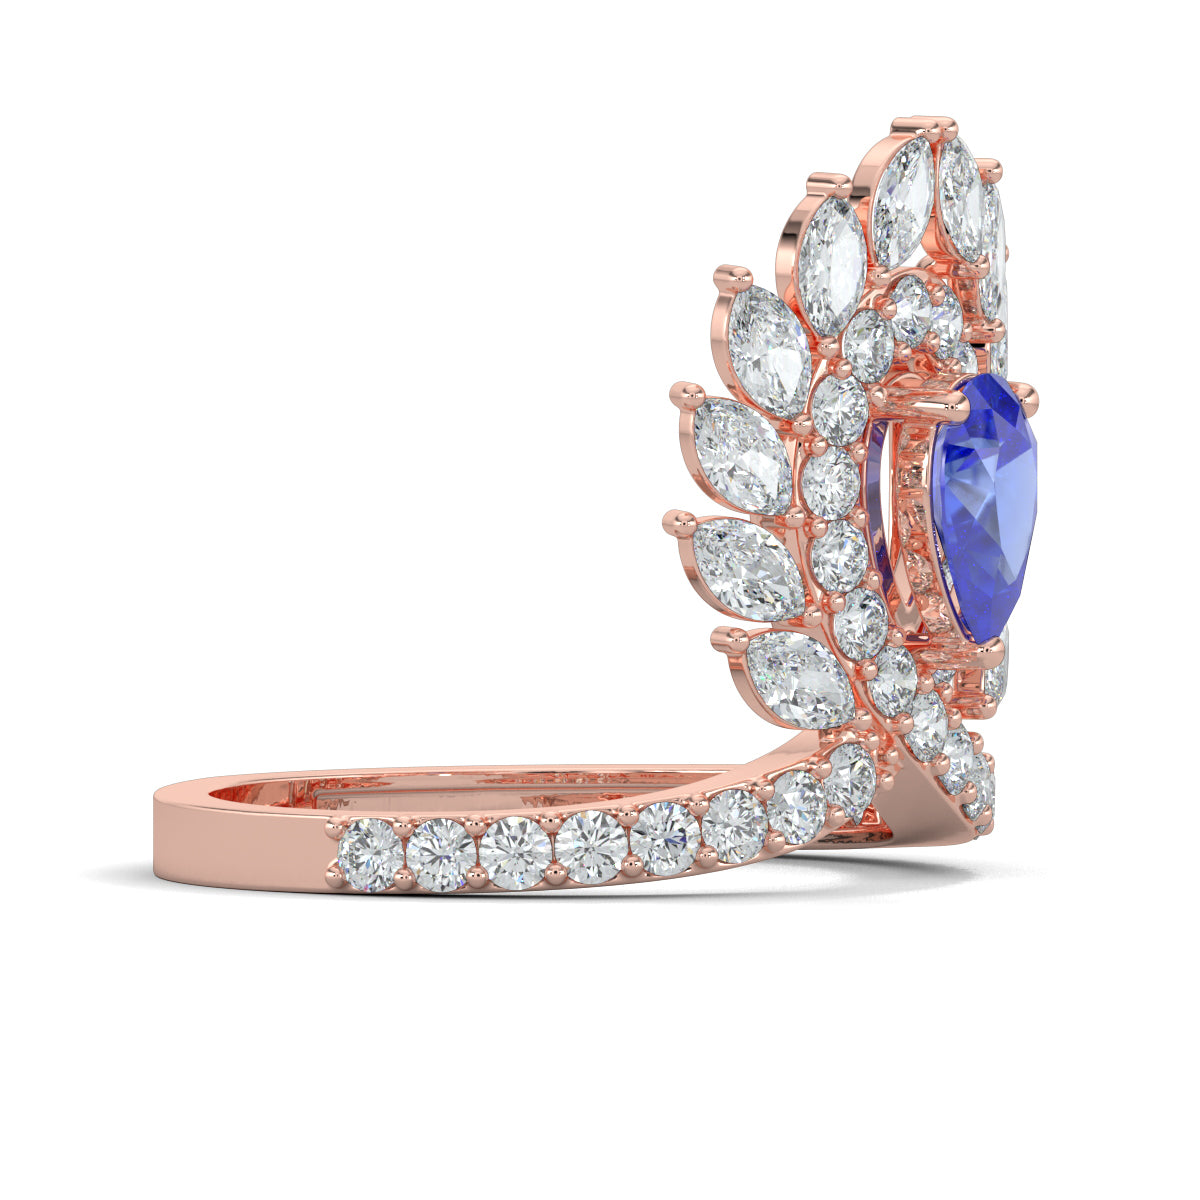 Rose Gold, Diamond Ring, Natural diamond ring, Majestic plume diamond ring, cocktail ring, lab-grown diamonds, blue sapphire diamond, pear-shaped diamonds, round diamonds, marquise diamonds, luxurious ring, statement jewelry